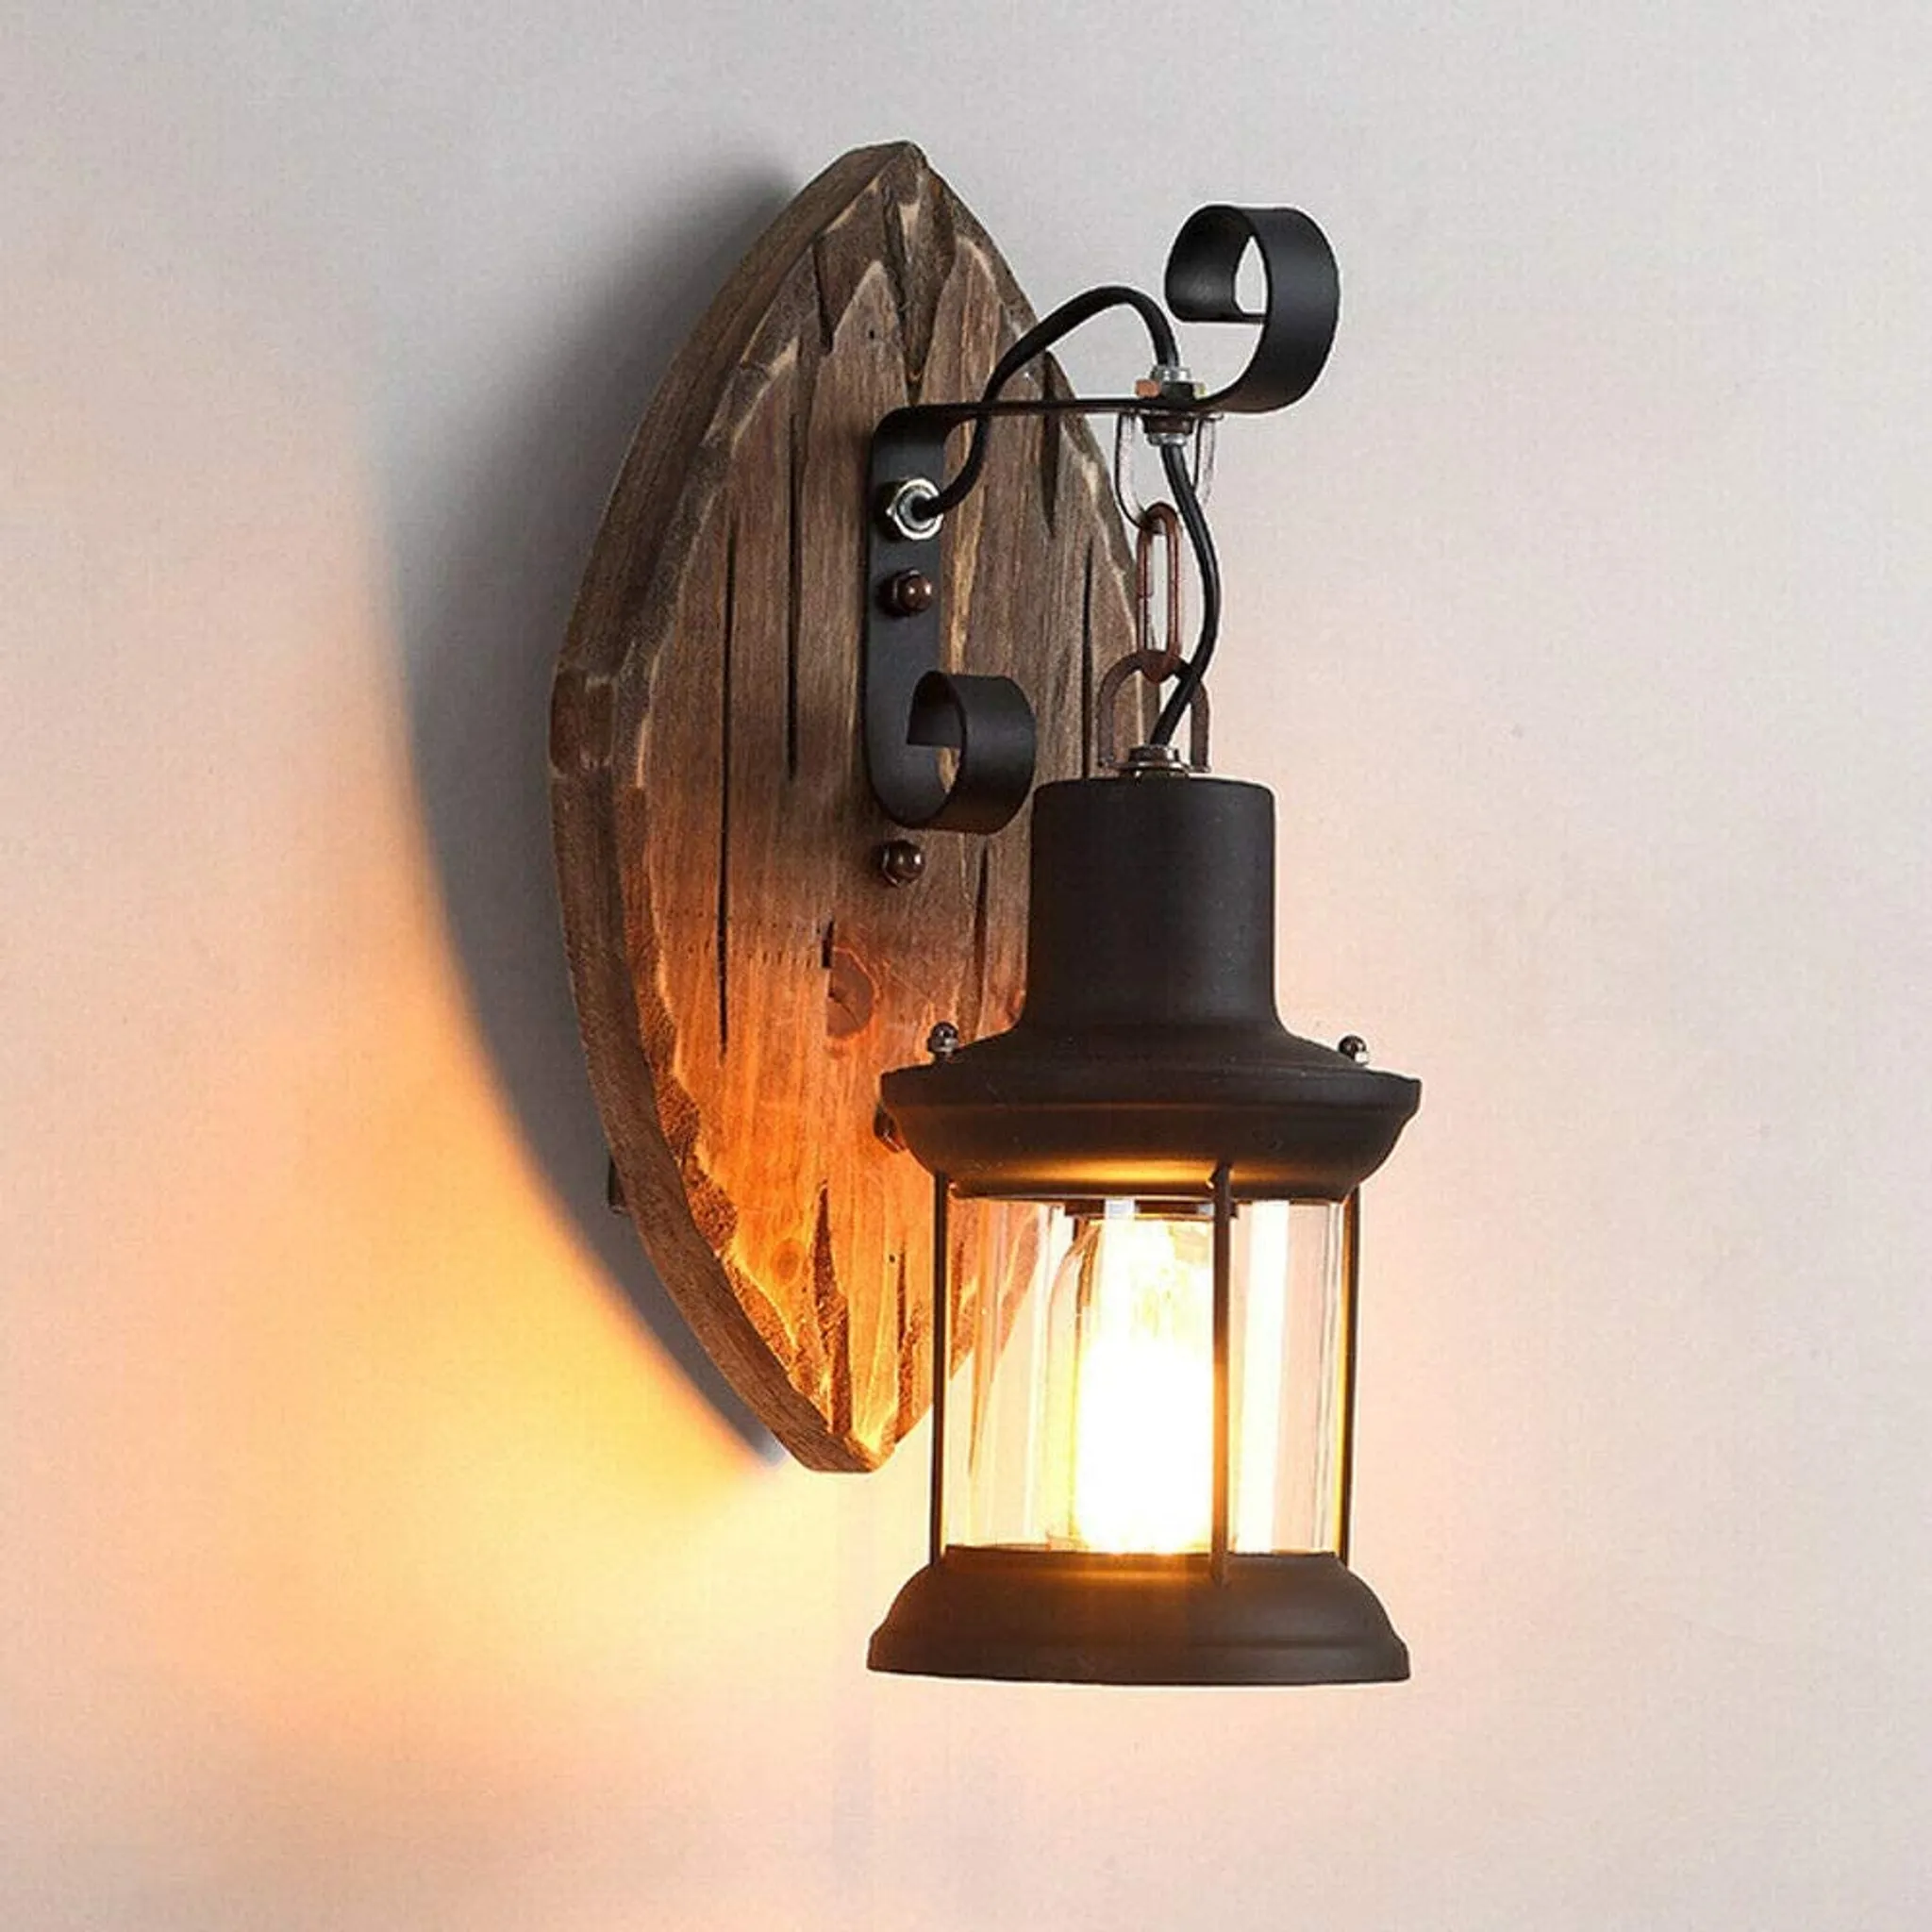 ZMH Retro Wandleuchte Holz Innen Wandlampe 1 flammige Vintage